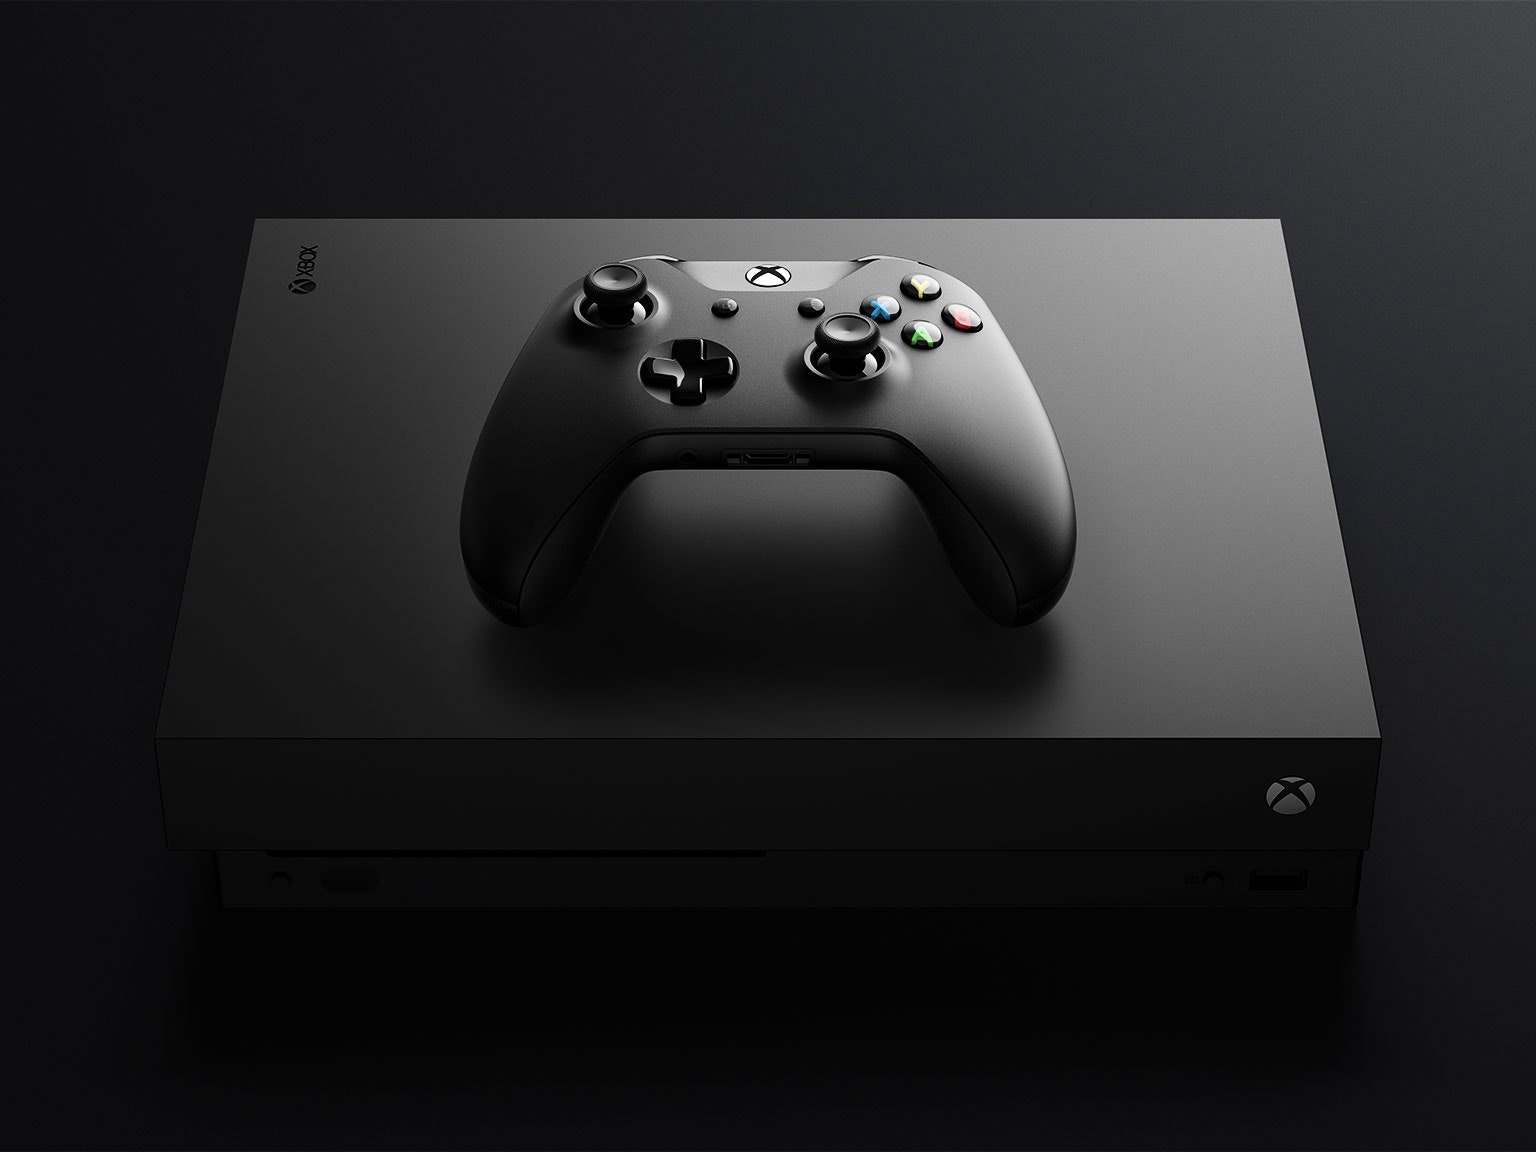 Xbox One 500 GB Console - Black [Discontinued]